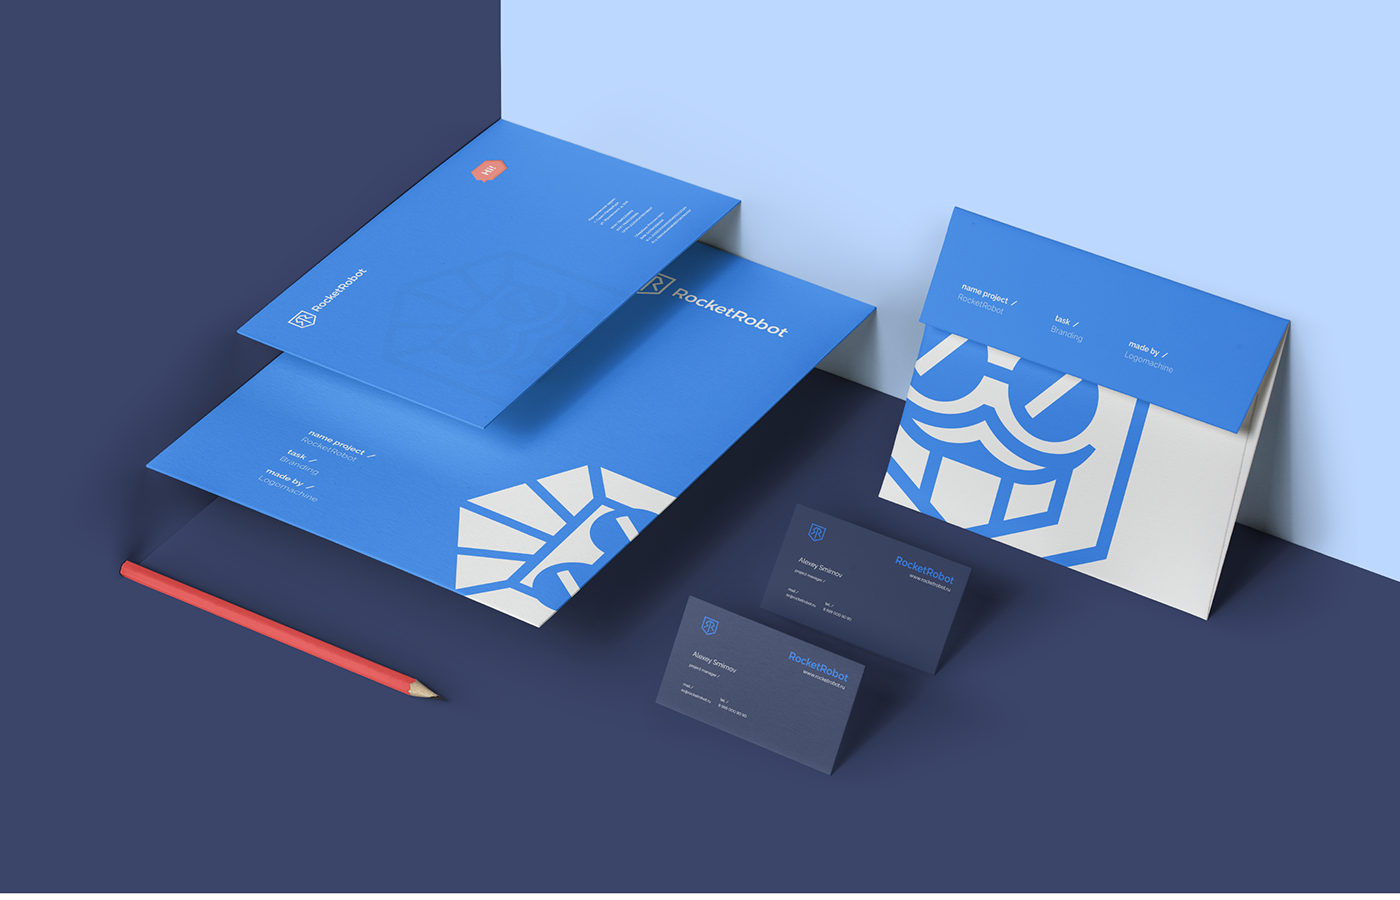 rocket robot blue logo branding  software mobile applications business